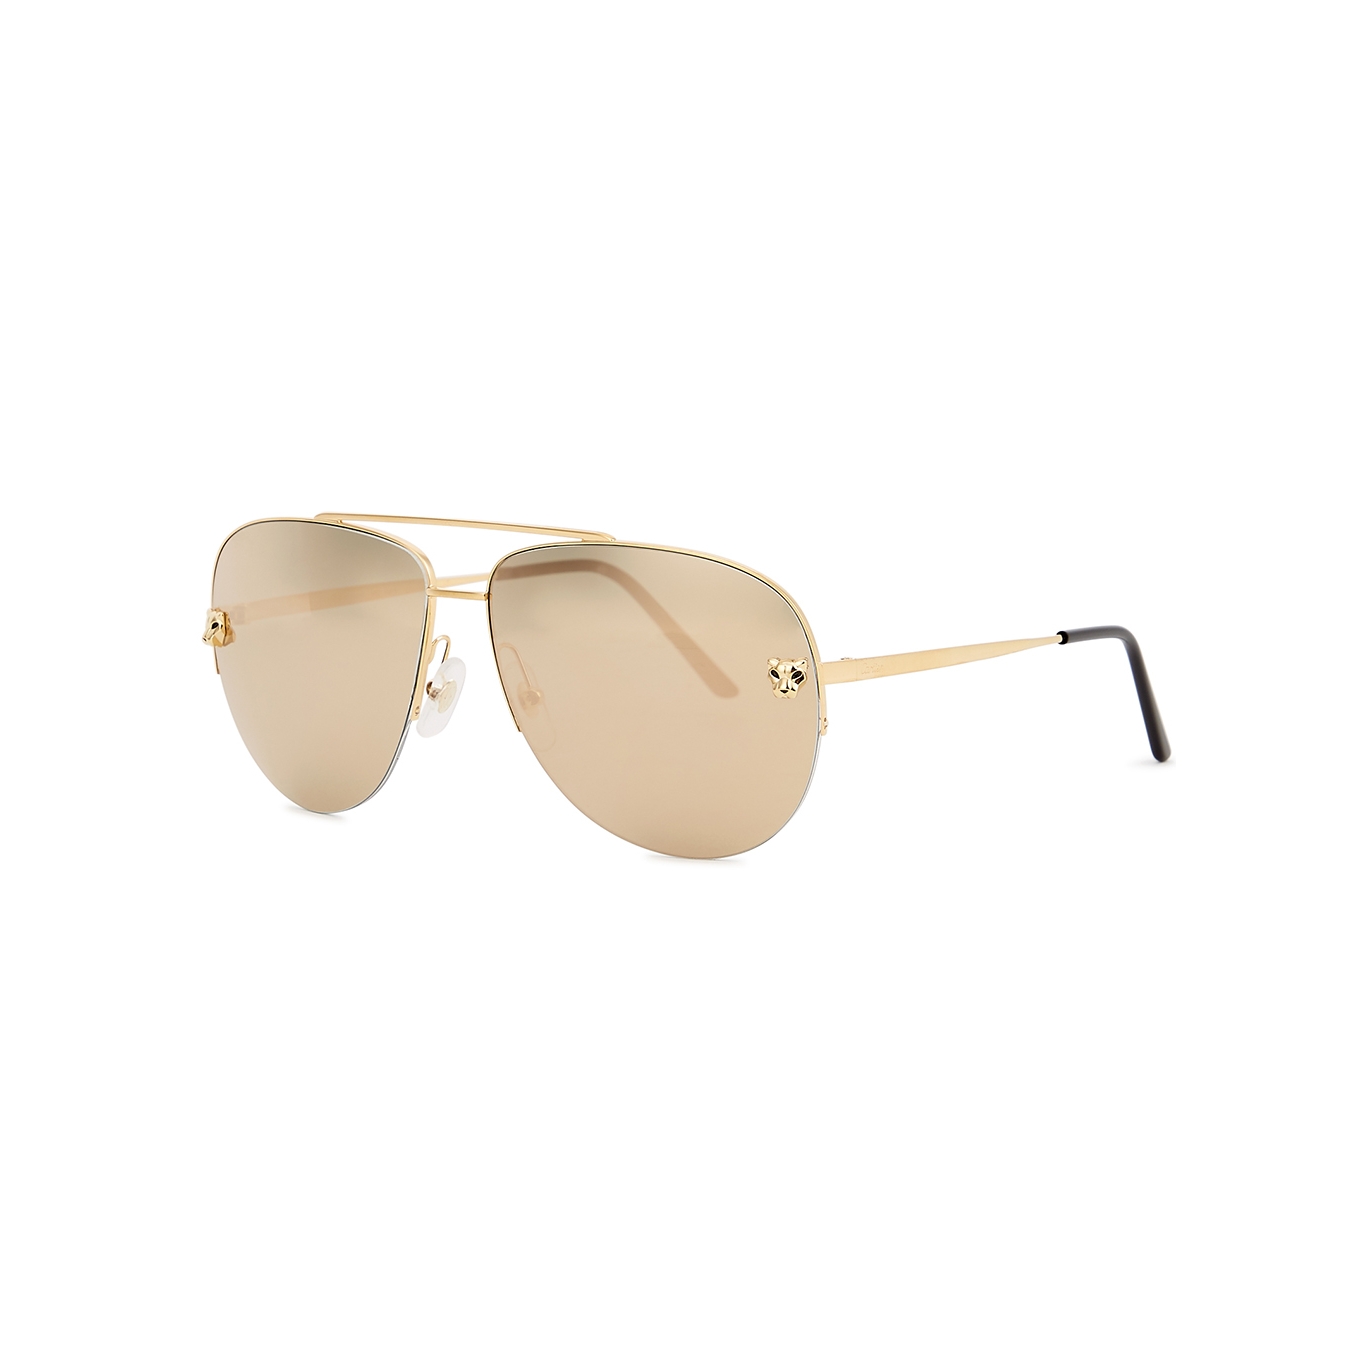 Cartier Panthère De Cartier Gold-Tone Mirror Aviator-Style Sunglasses